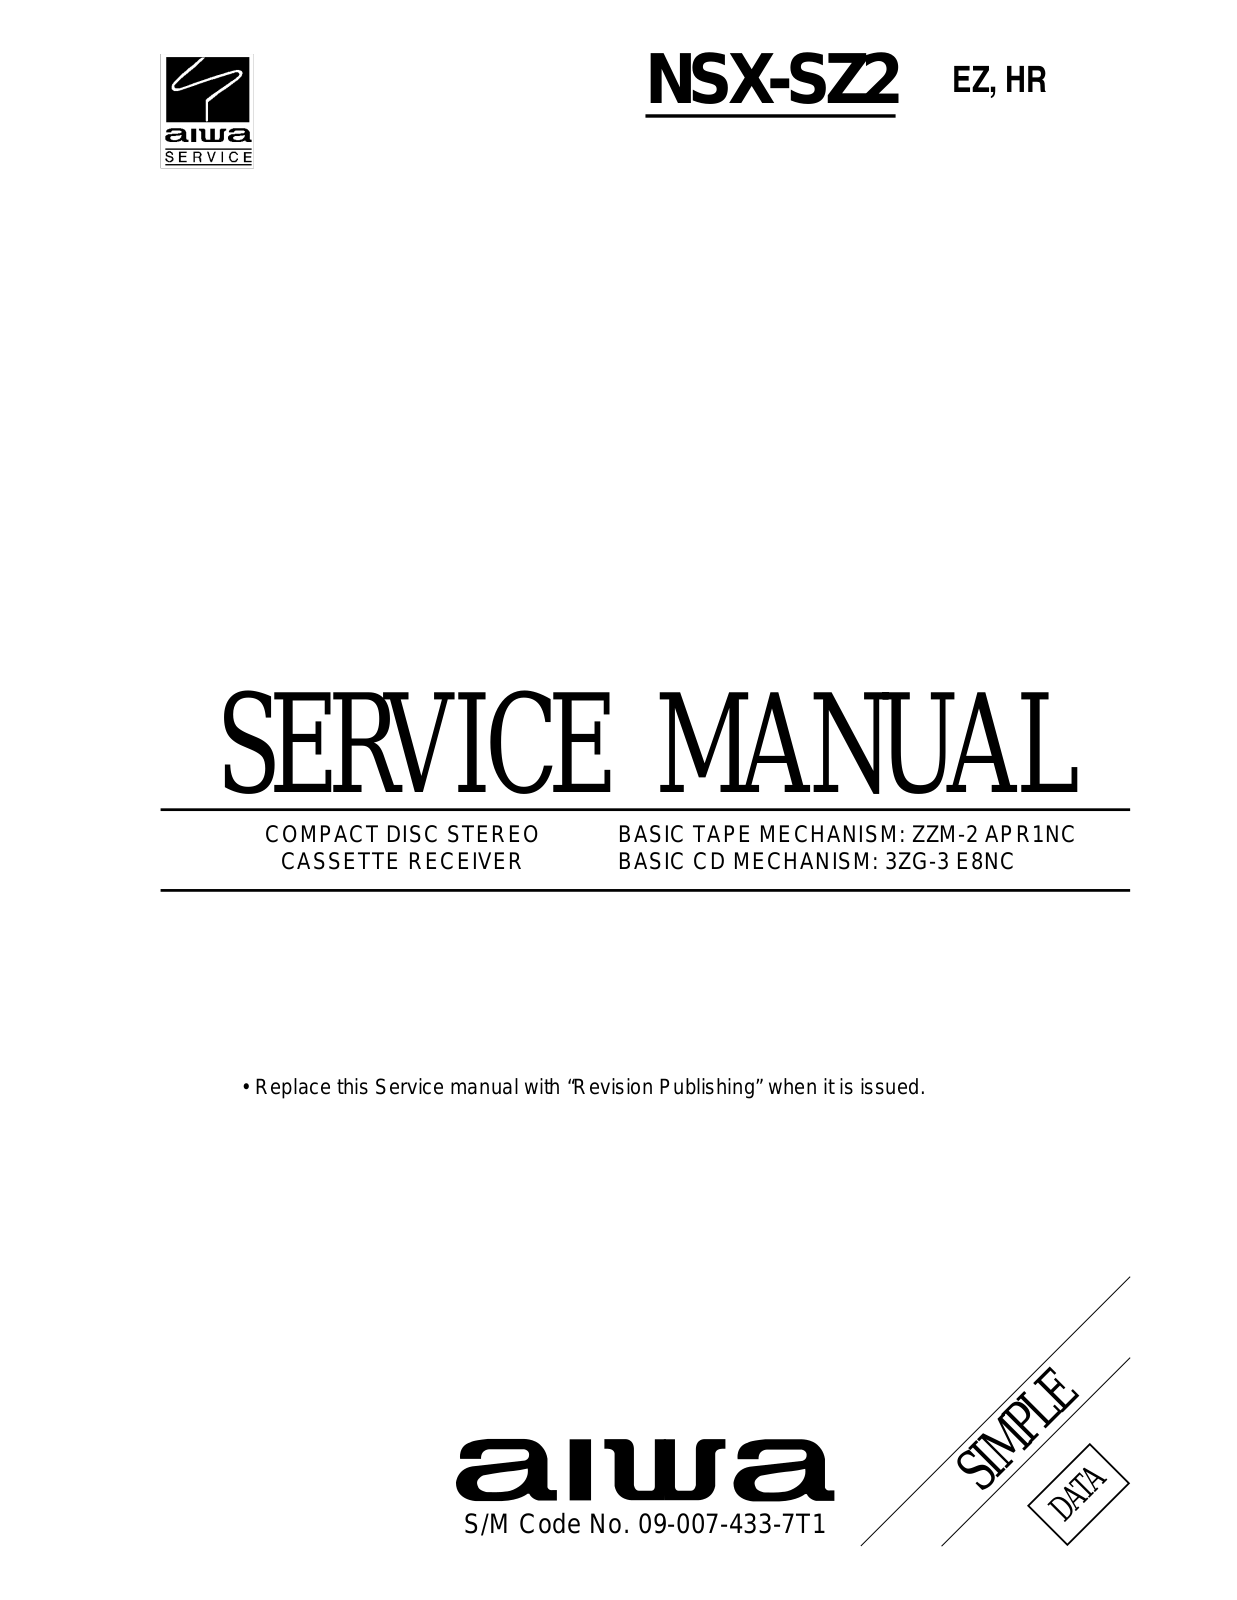 Aiwa NSX-SZ2 Service Manual